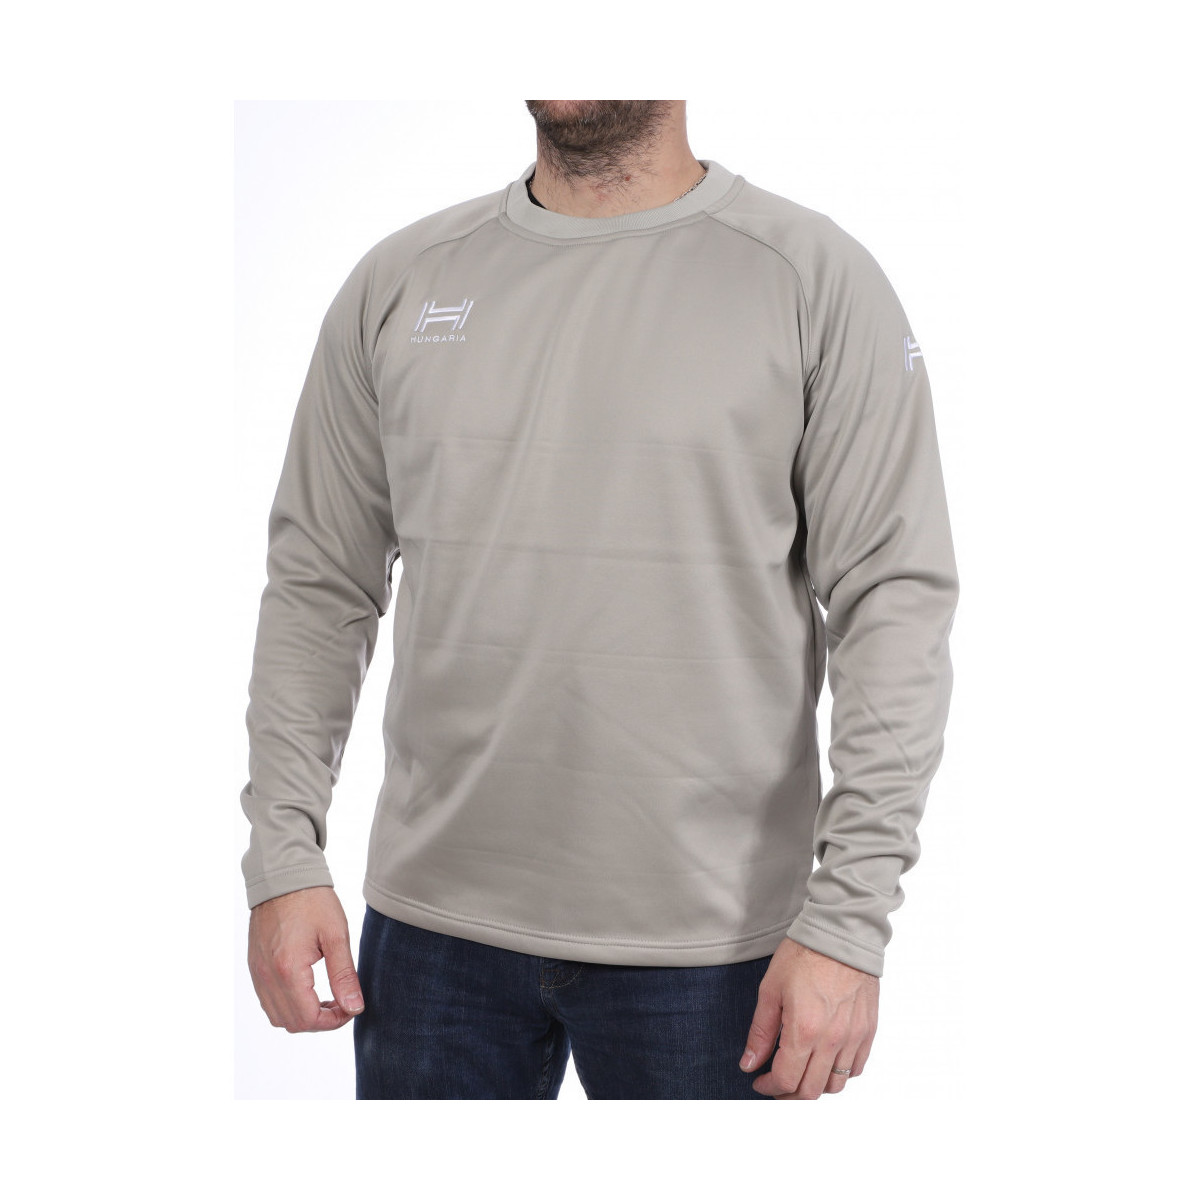 Kleidung Herren Sweatshirts Hungaria H-15TMUXE000 Grau